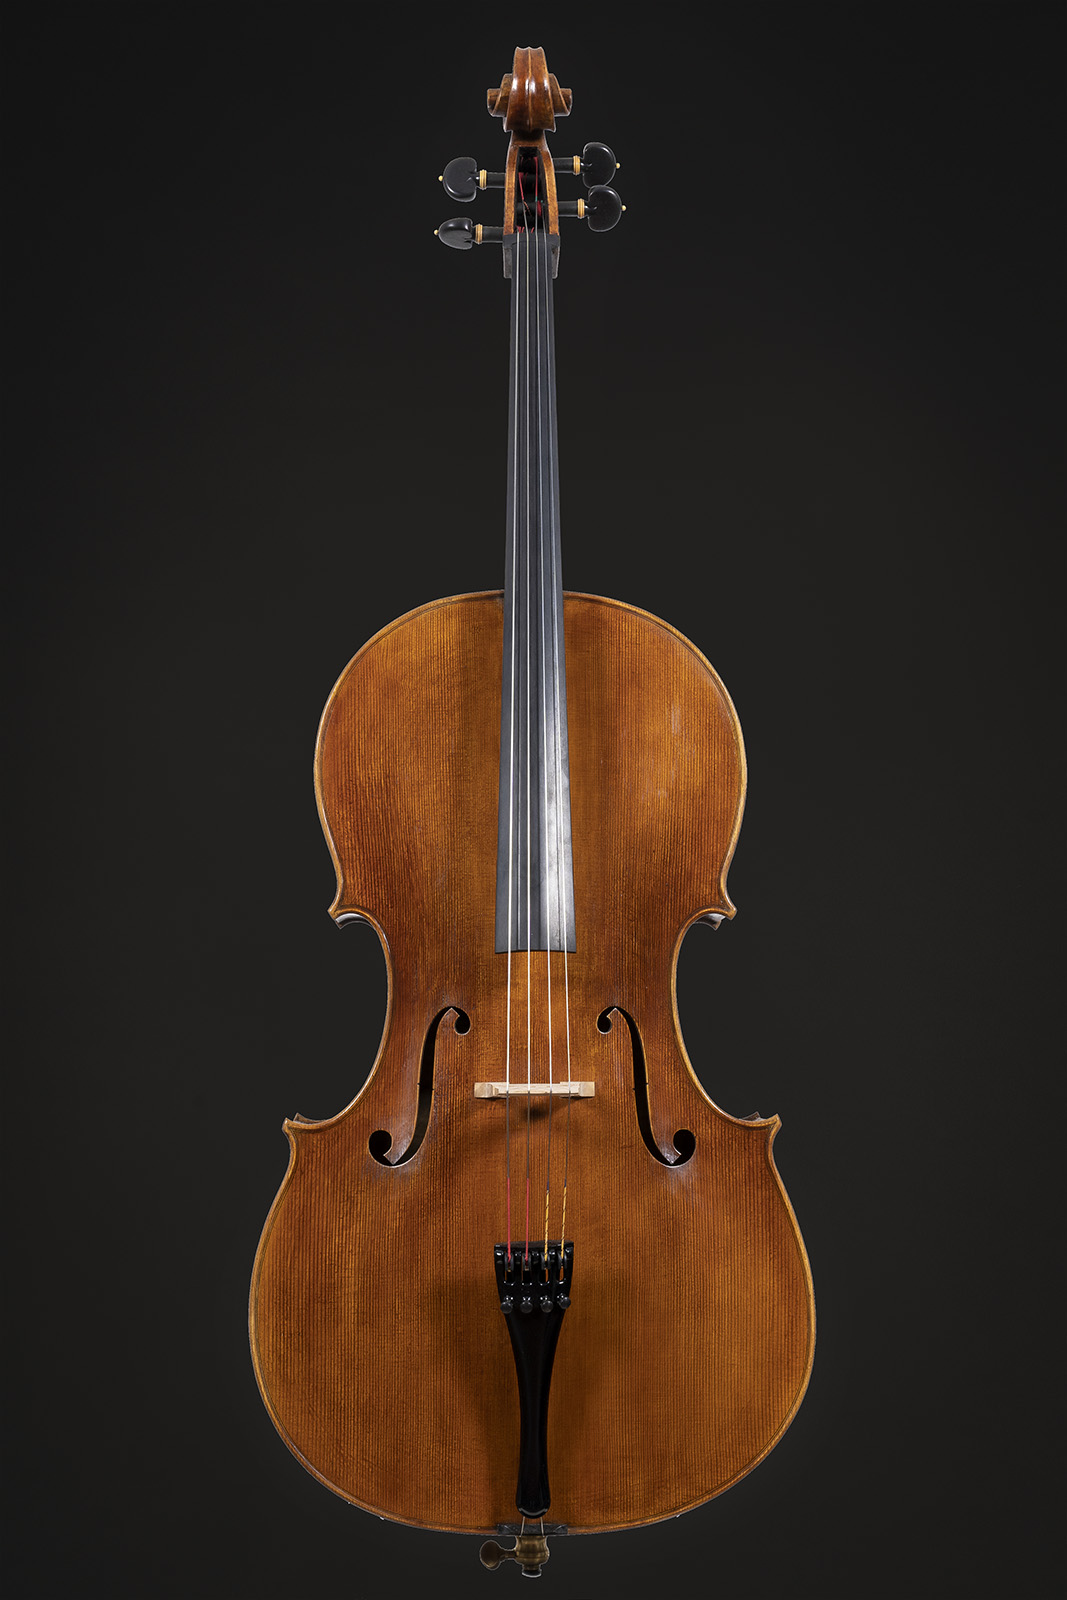 Antonio Stradivari Cremona 1730 “Cristiani“ “Kyoto“ - Image 1